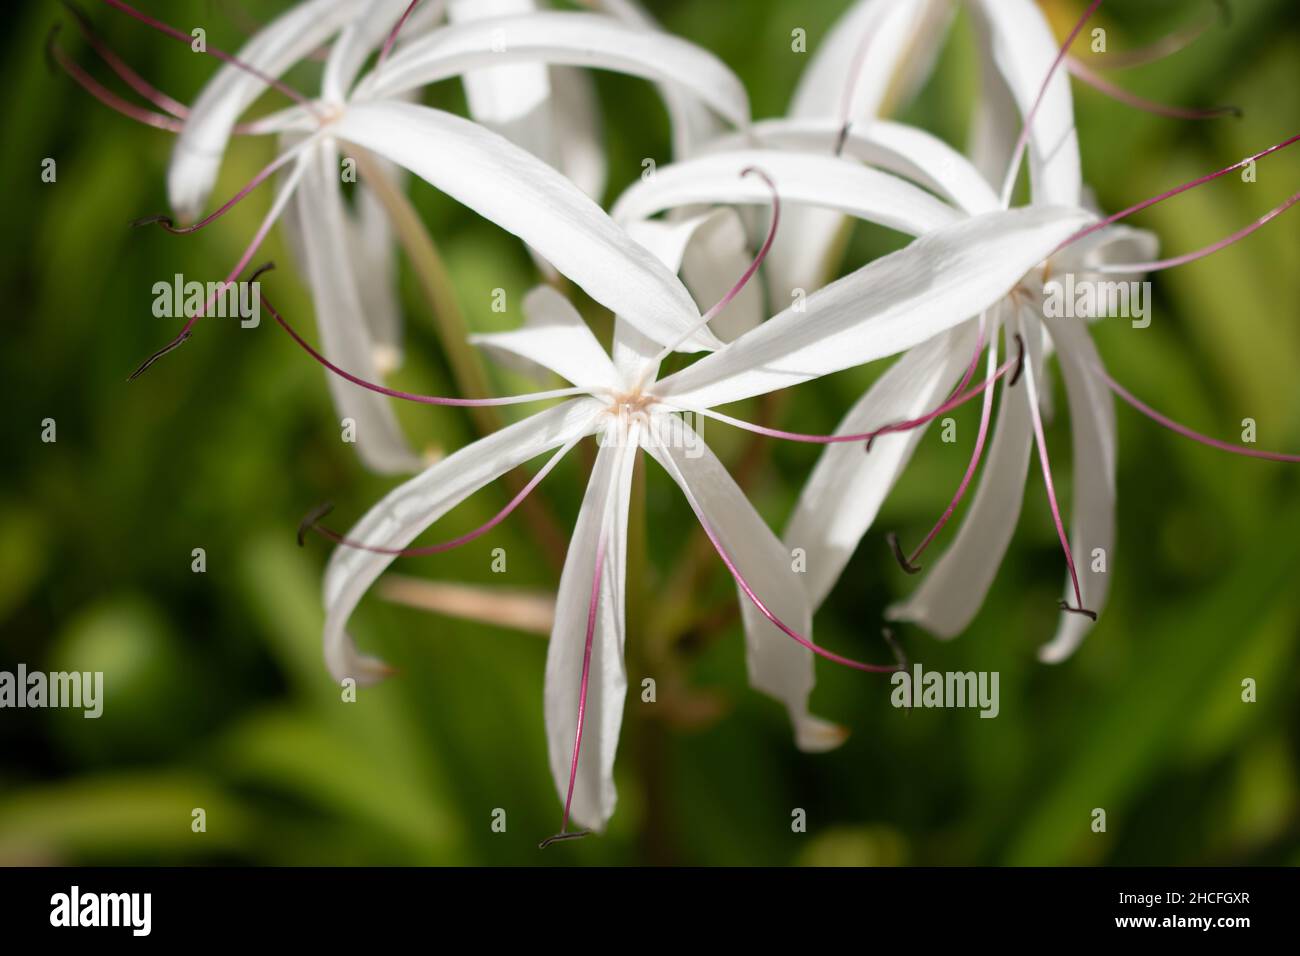 Closeup of white Crinum asiaticum flowers in a garden Stock Photo